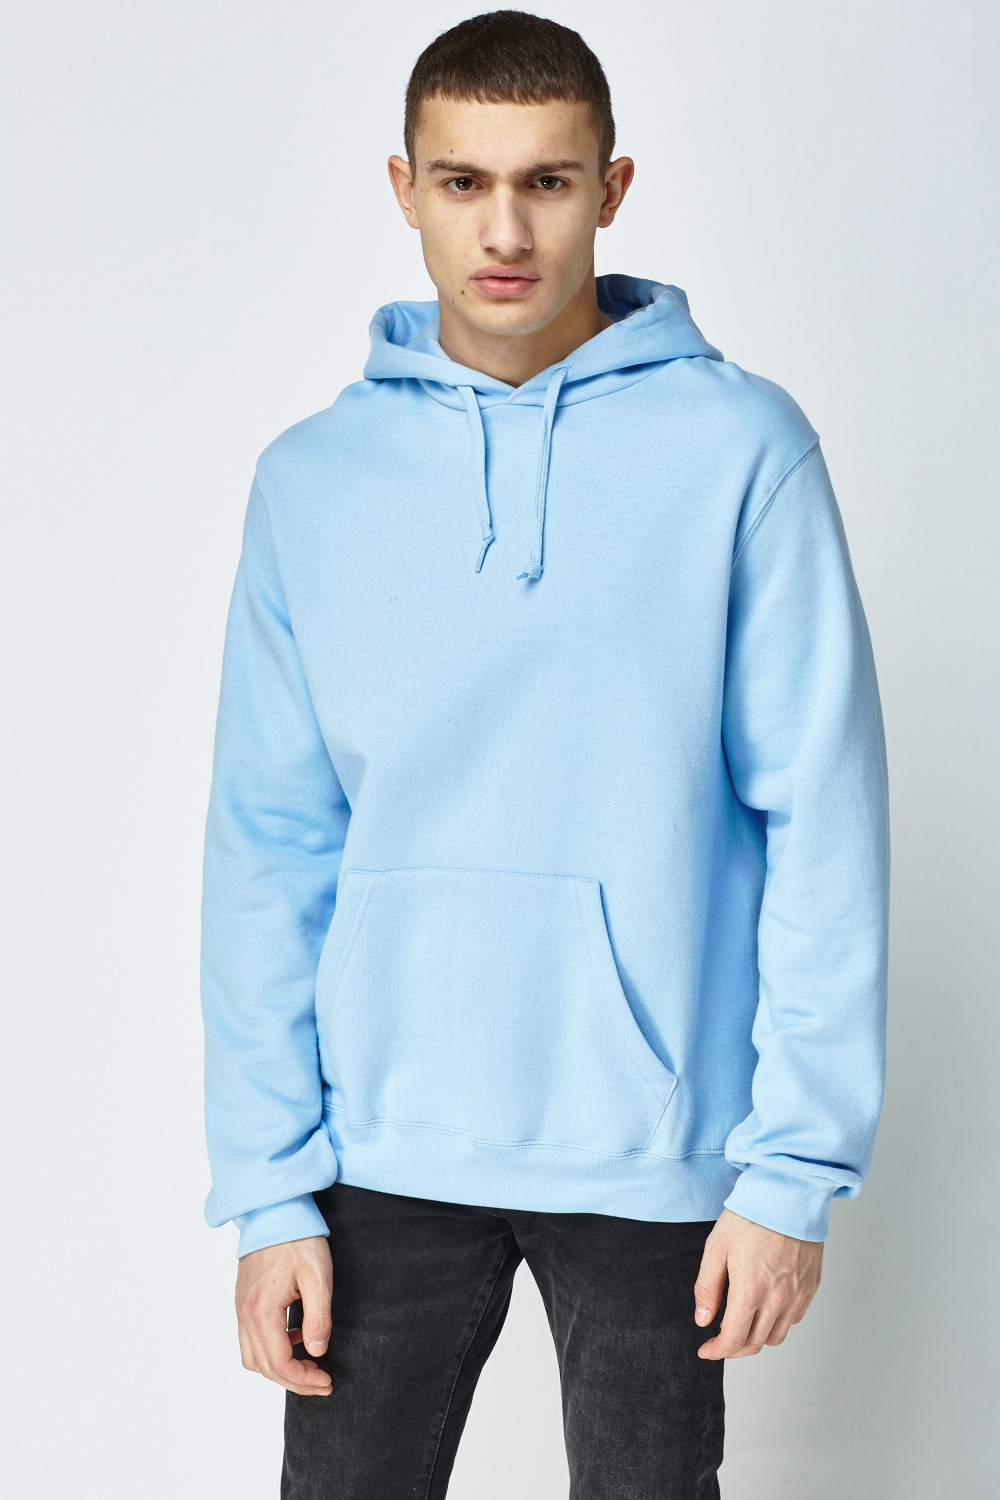 Download Light Blue Sweatshirt - Just $6